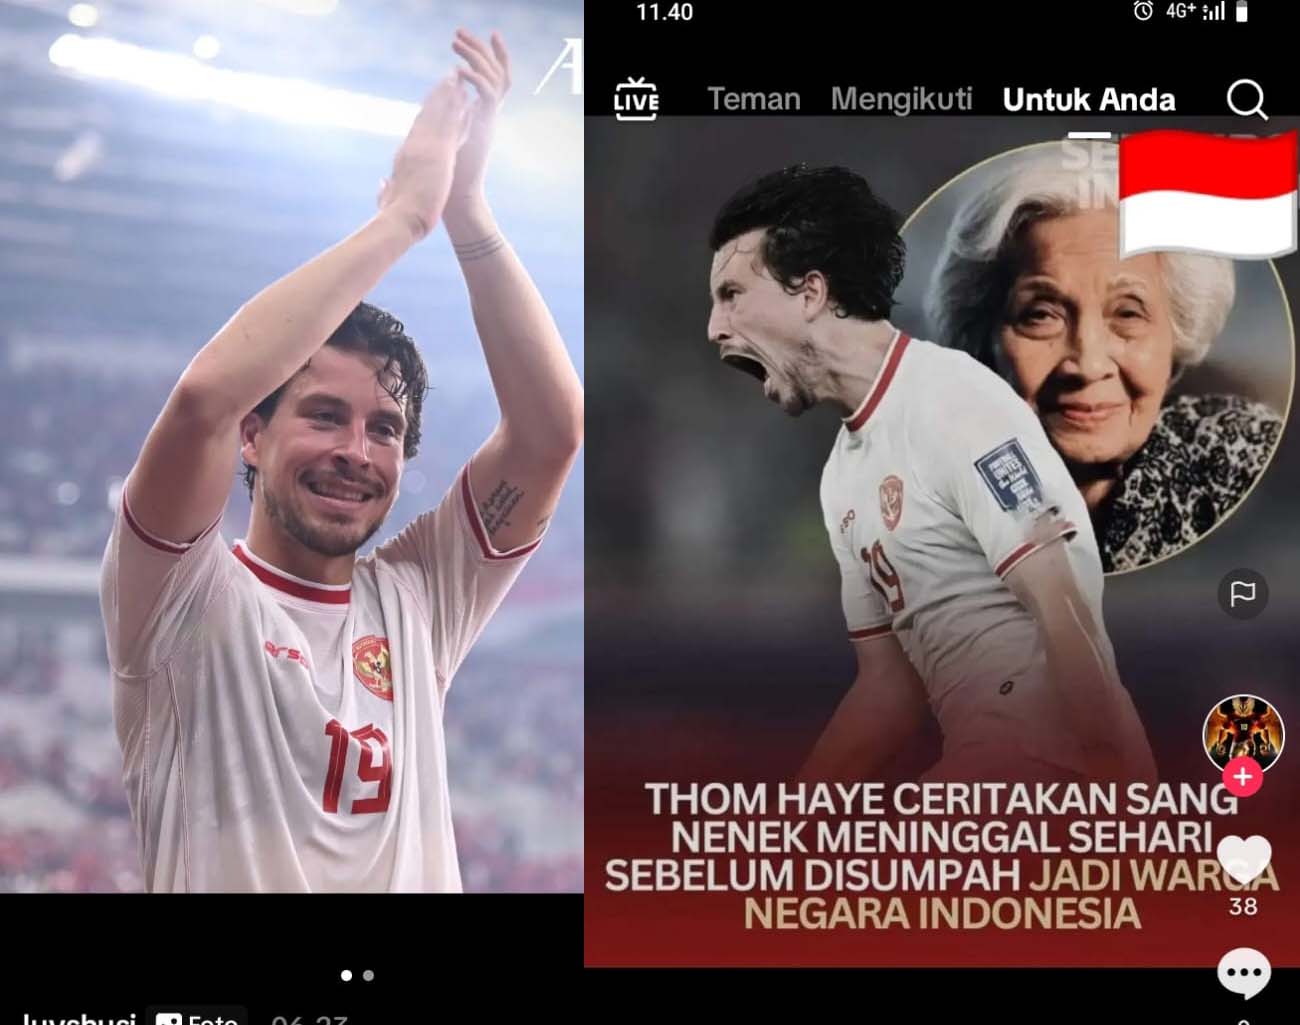 Thom Haye Singa Indonesia, Semangat Sang Nenek, Pemain Keturunan Indonesia, Kualifikasi Piala Dunia 2026